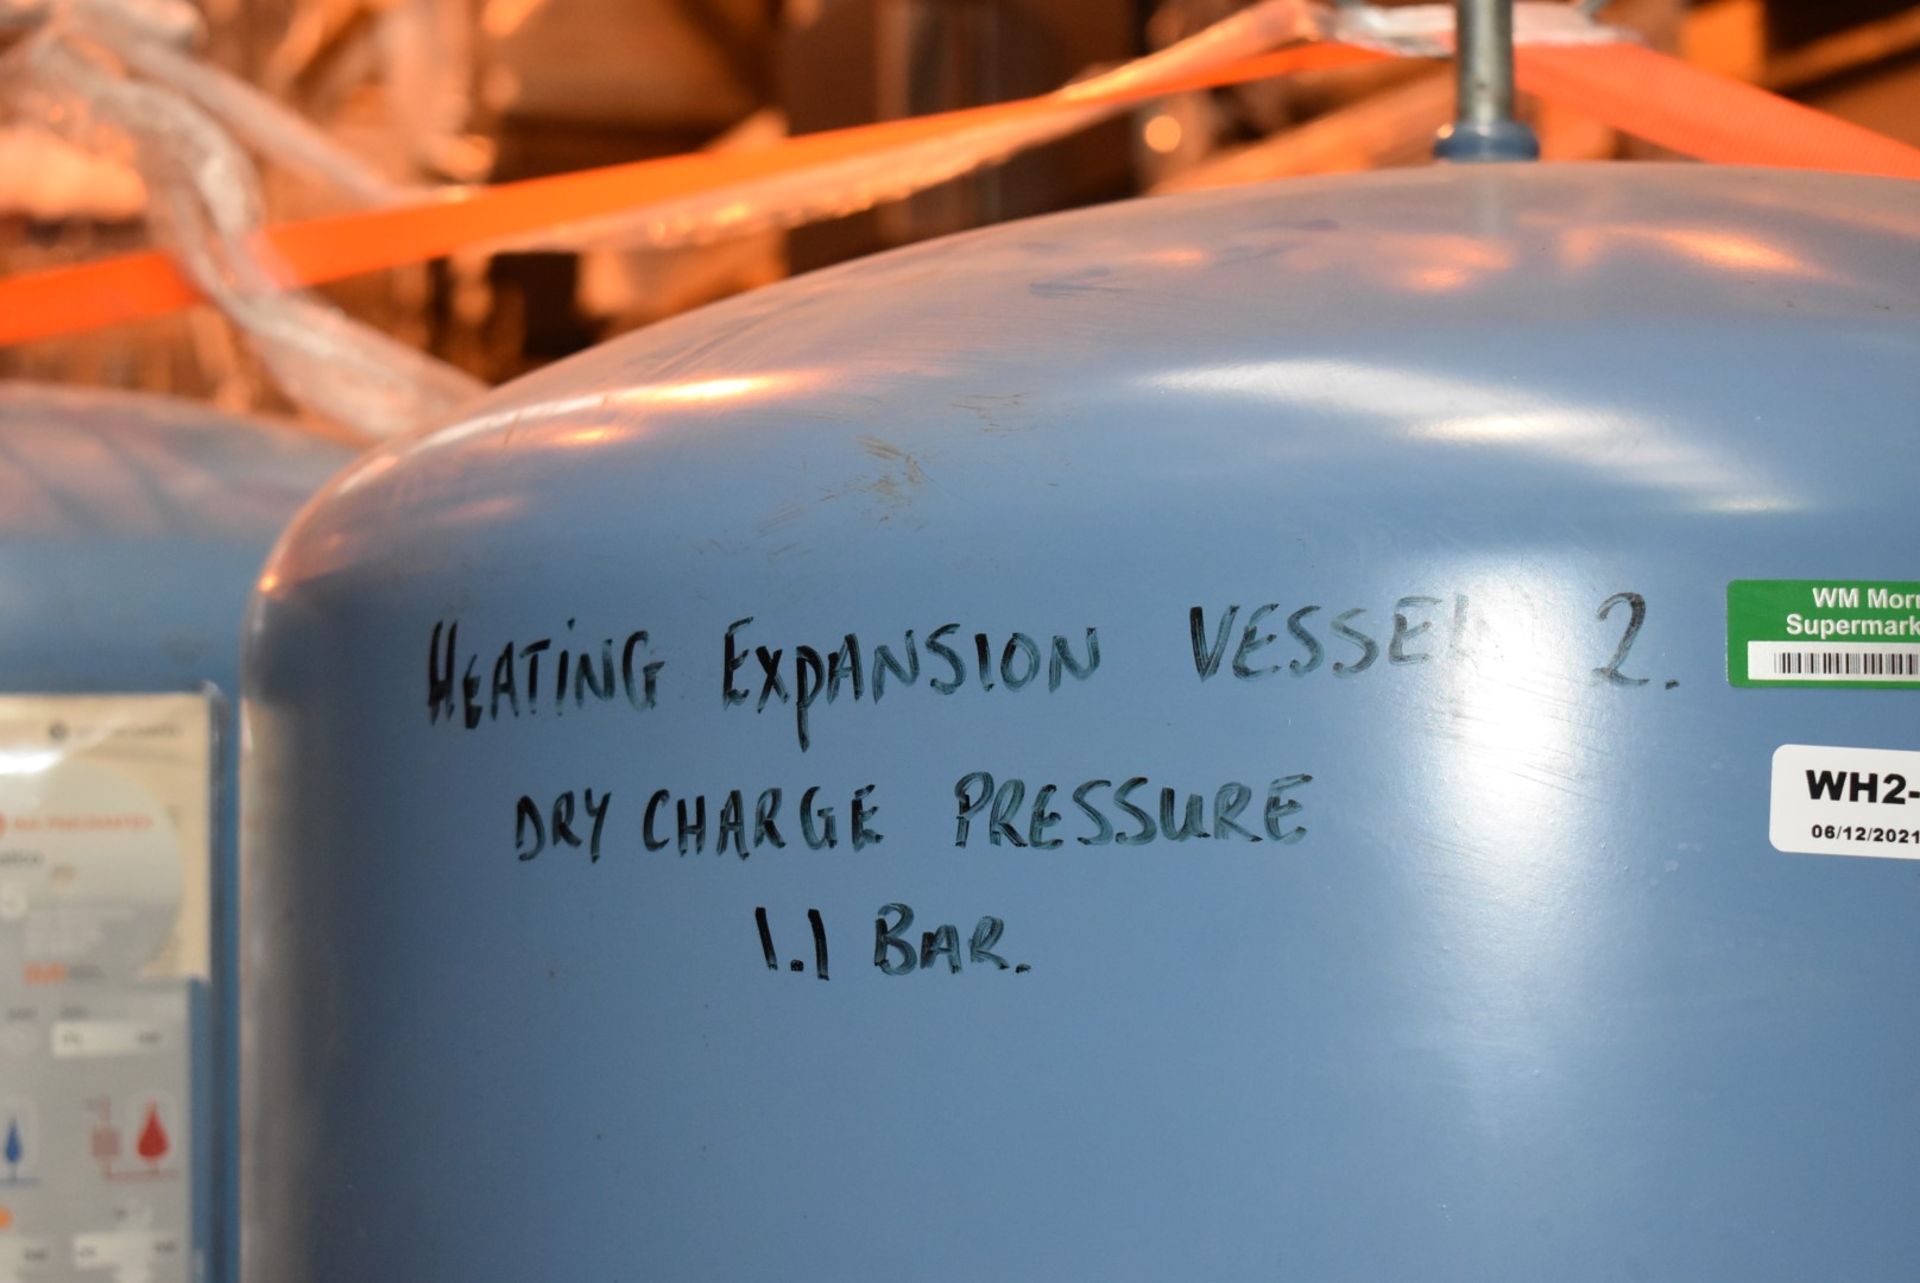 1 x Pneumatex Statico 500L 6 Bar Pressure Expansion Vessel - Product Code: SU 500.6 - RRP £1,678 - - Image 7 of 7